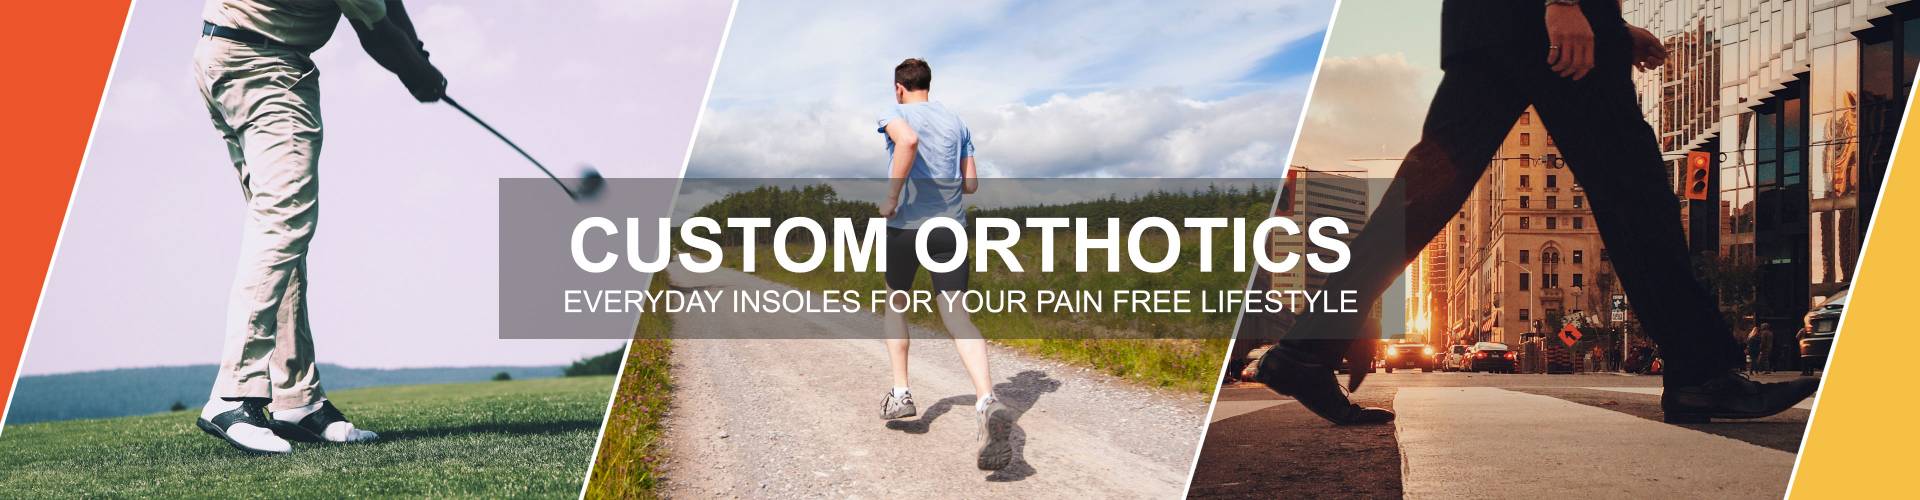 custom orthotics online